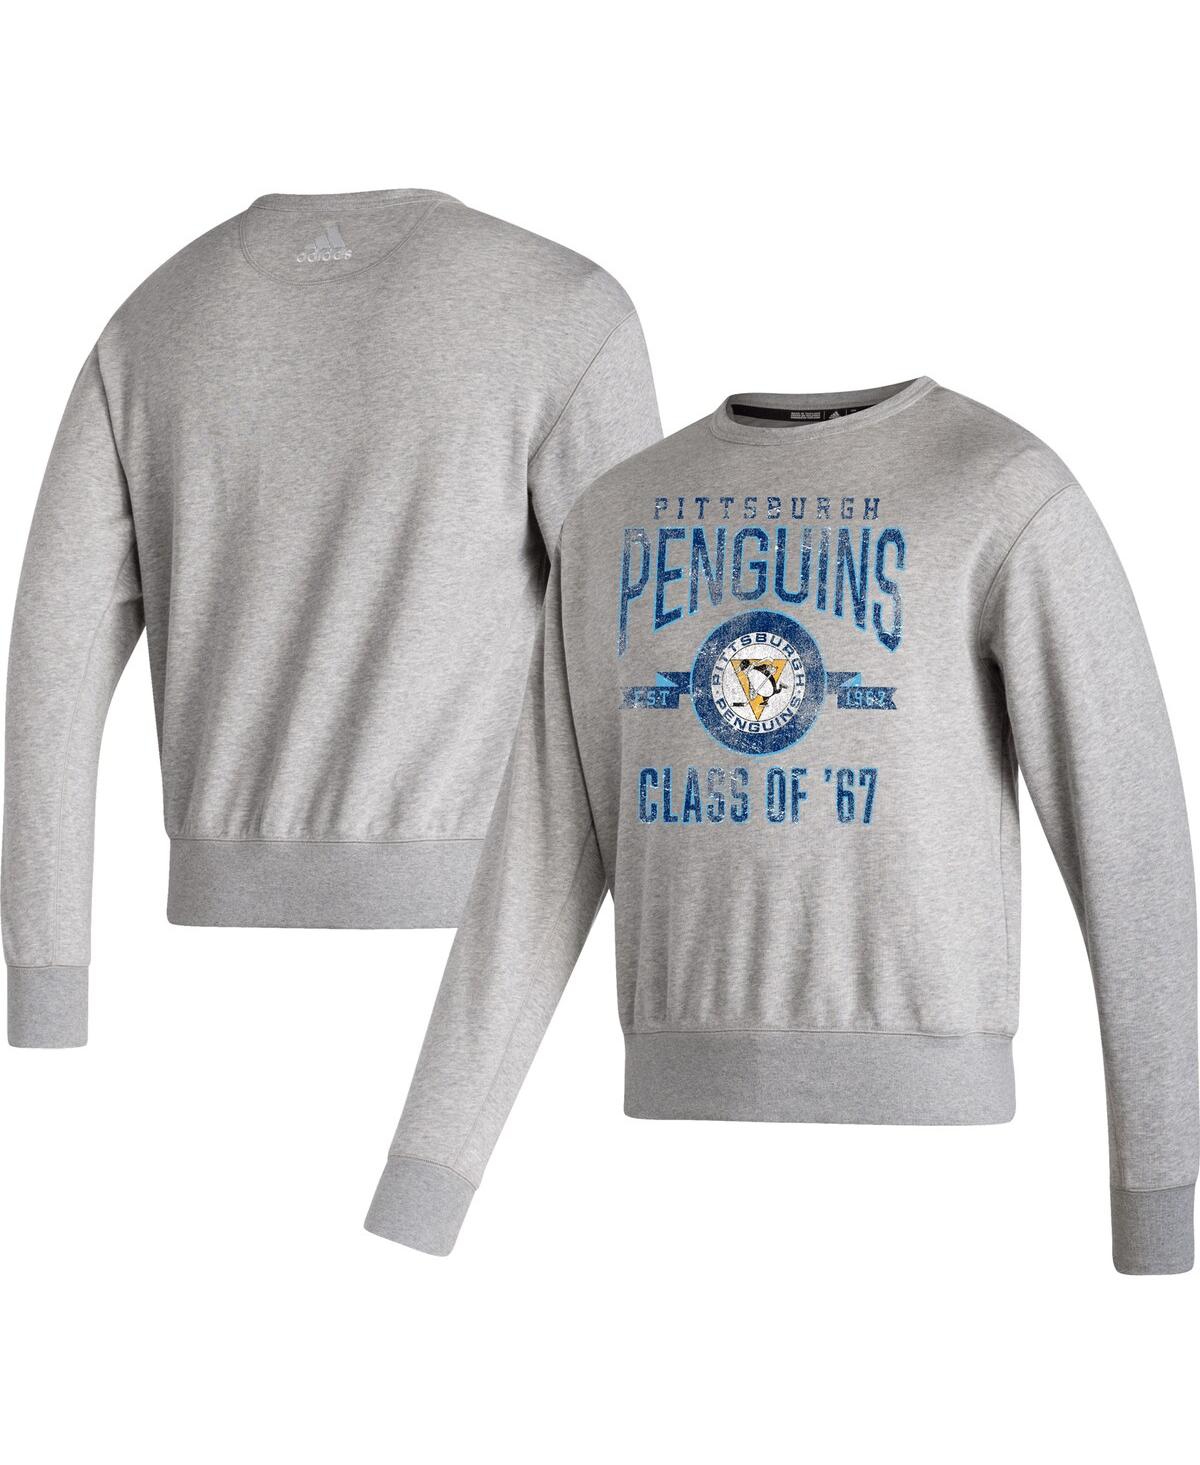 Shop Adidas Originals Men's Adidas Heathered Gray Pittsburgh Penguins Vintage-like Pullover Sweatshirt